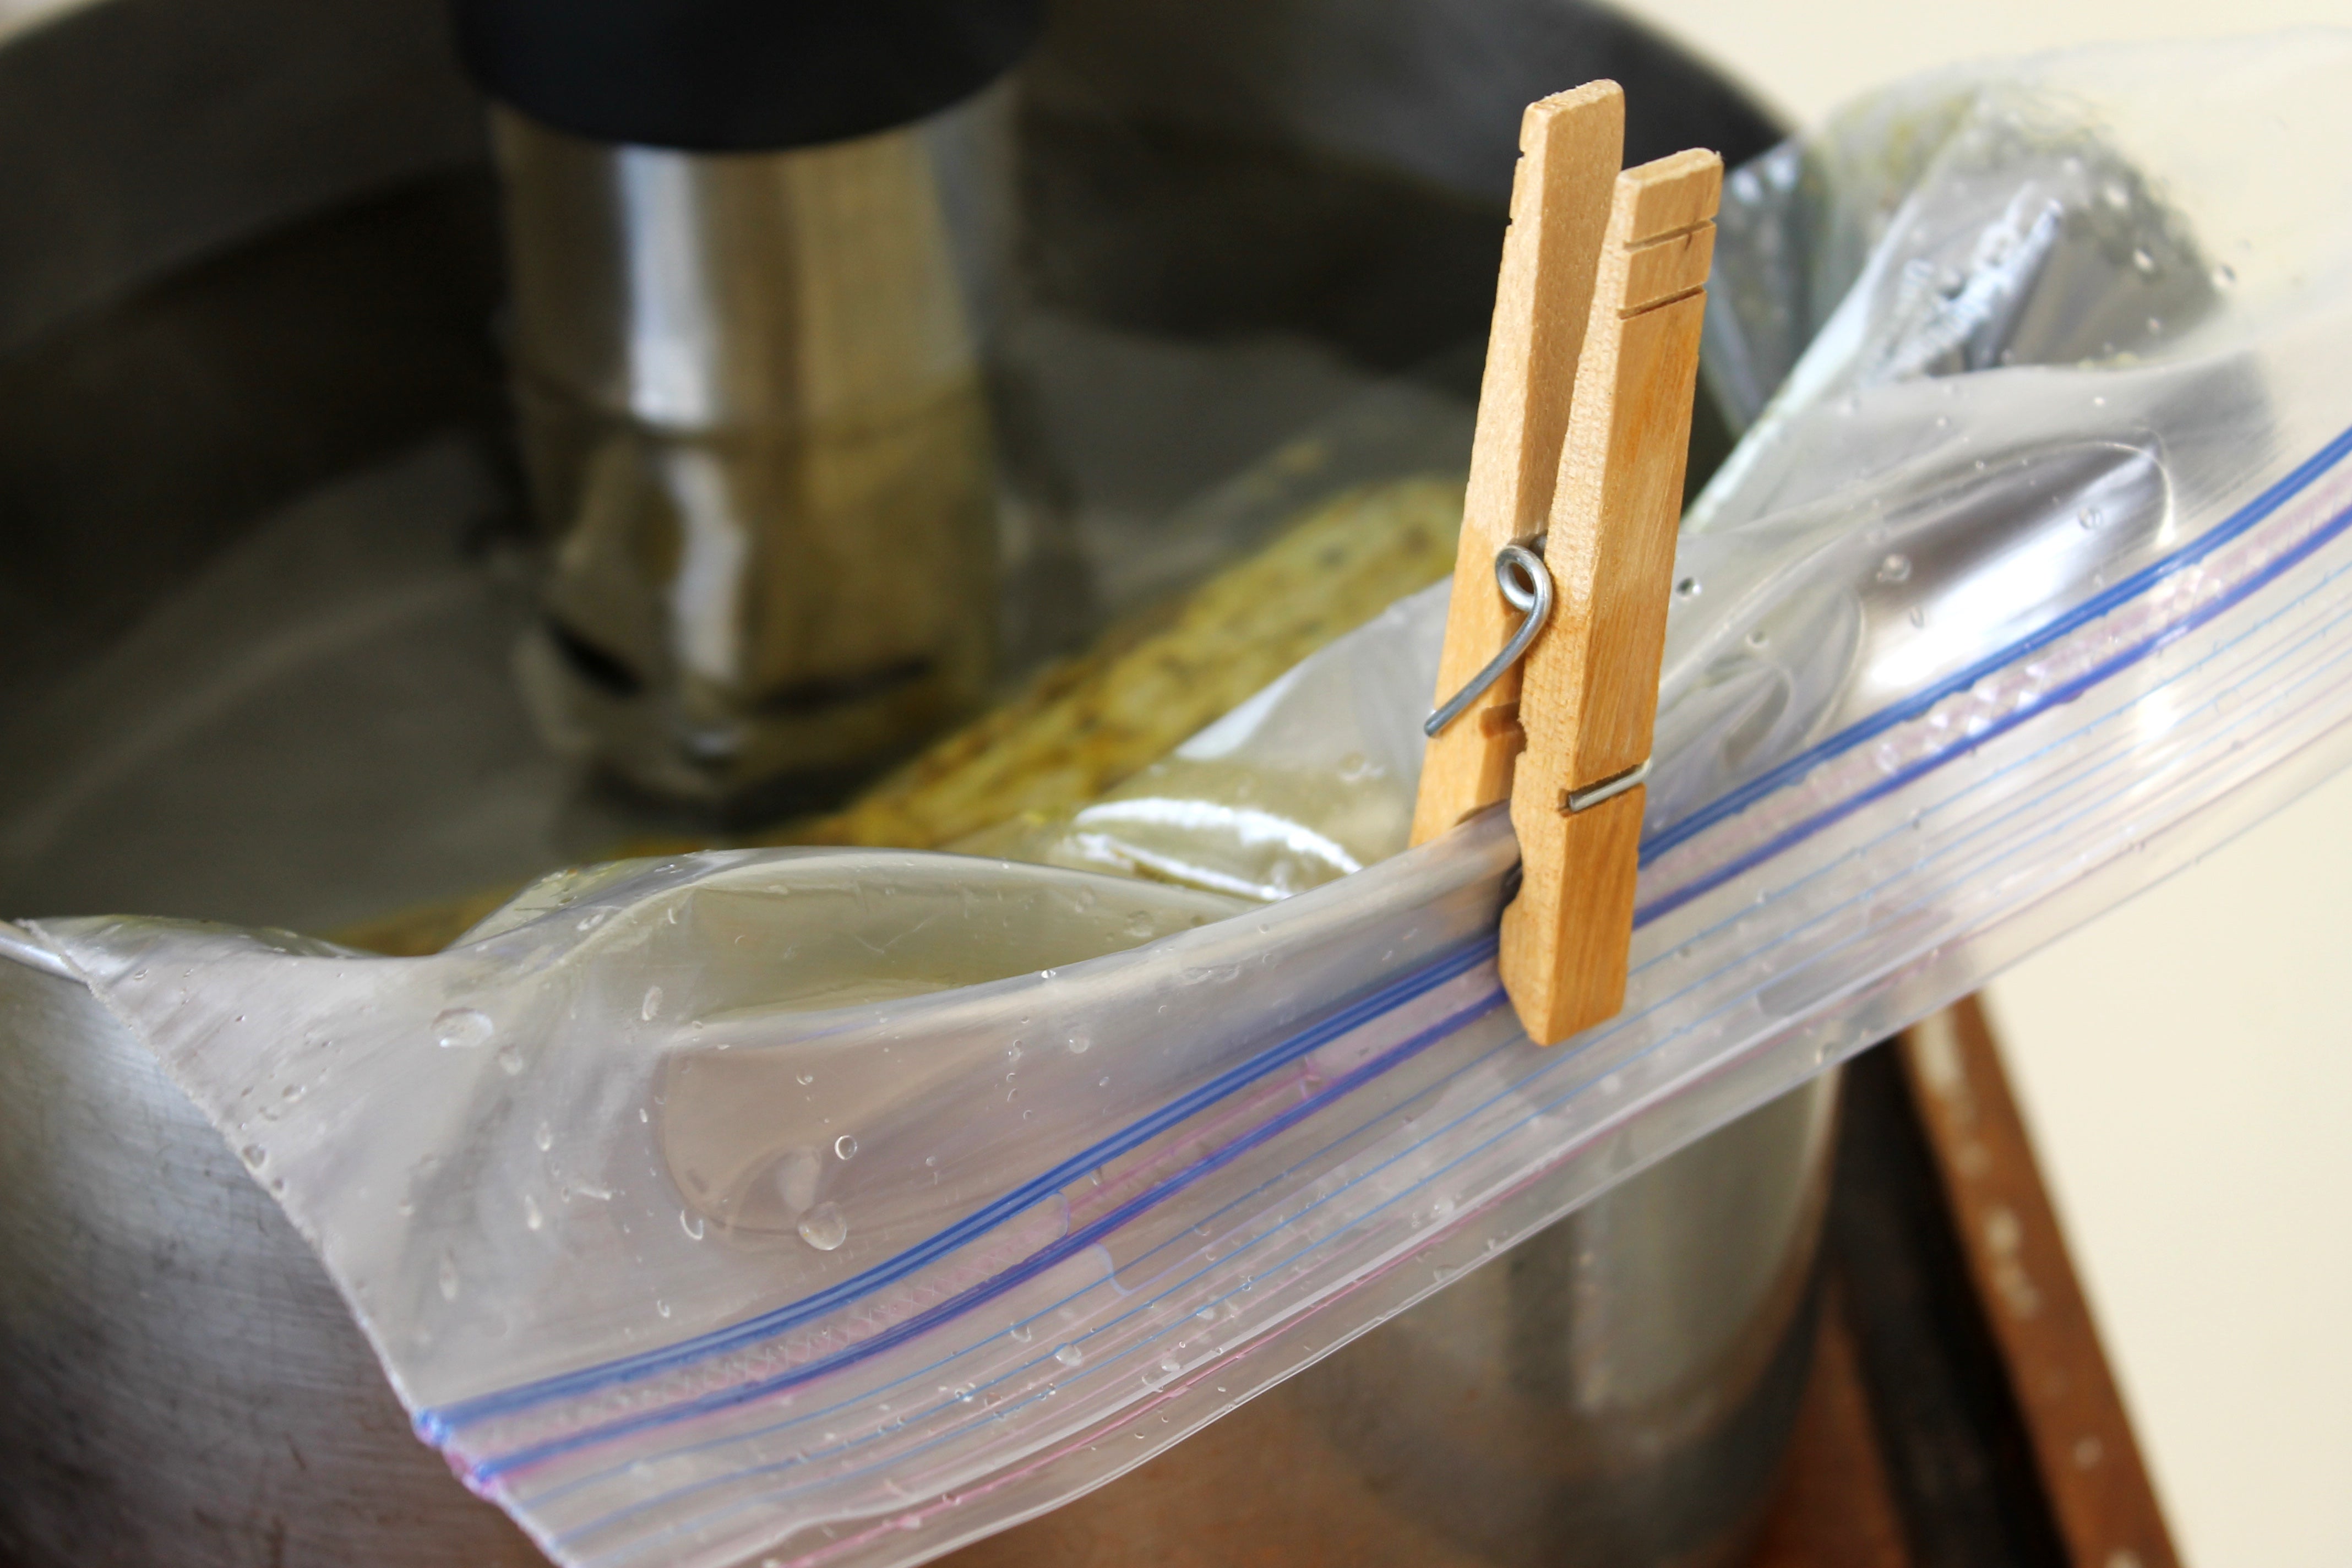 Simple Fixes for Floating Bags - Anova Sous Vide Hacks – Anova Culinary